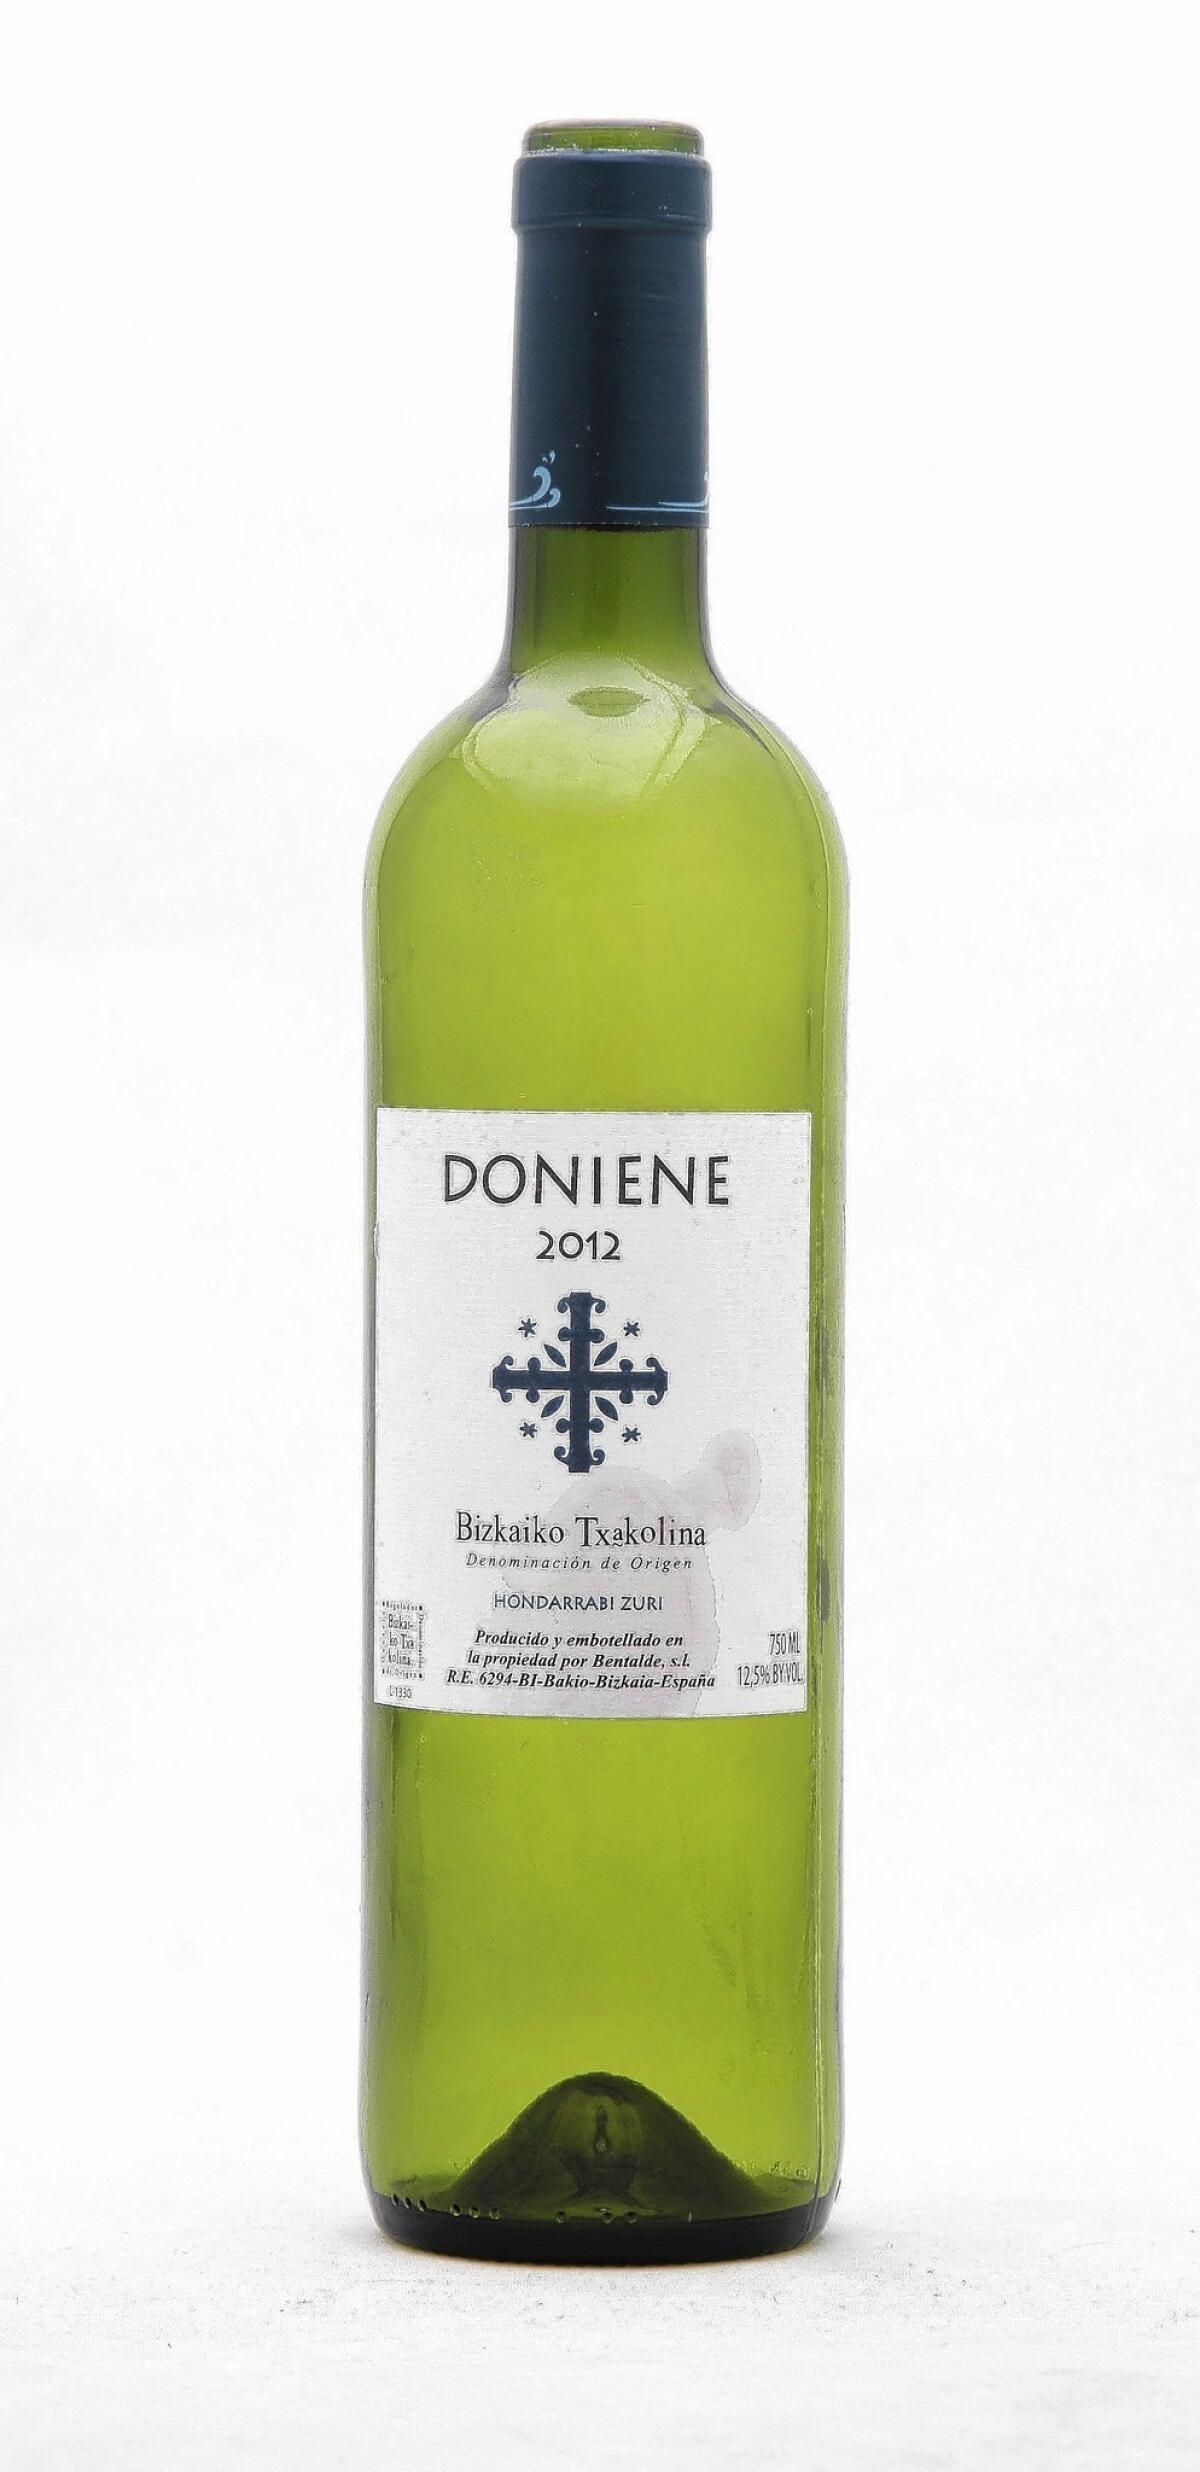 Wine of the Week: 2012 Doniene Bizkaiko Txakolina.